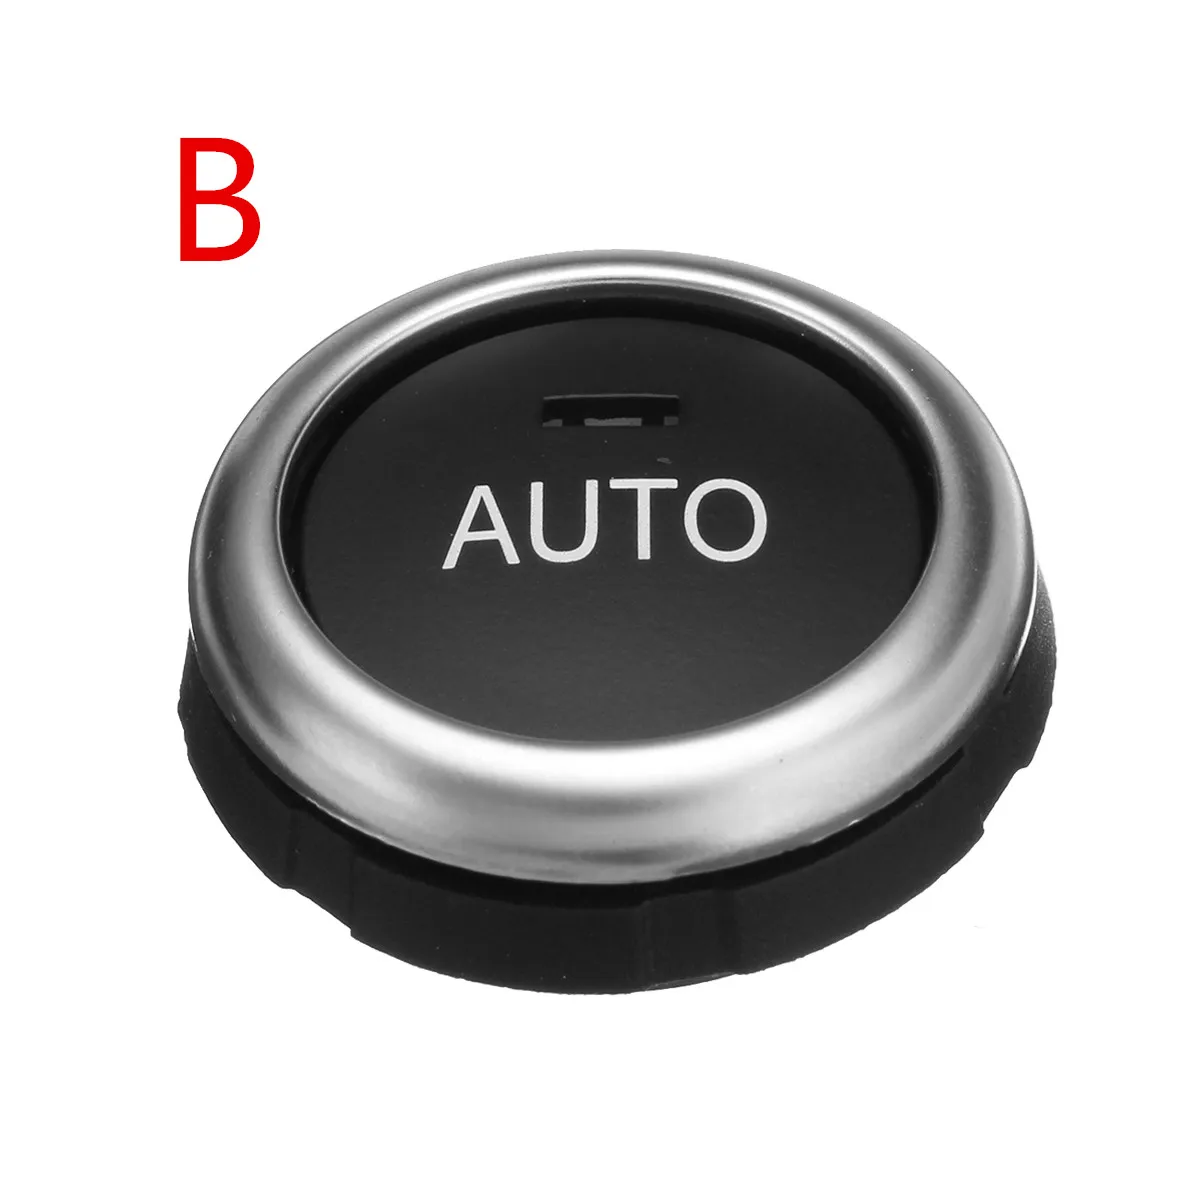 A/C кондиционер вращения Управление Кнопка Konb для BMW 5 6 7 серии X5 X6 F10 F01 F15 F16 Авто Температура Кнопка регулировки - Цвет: B